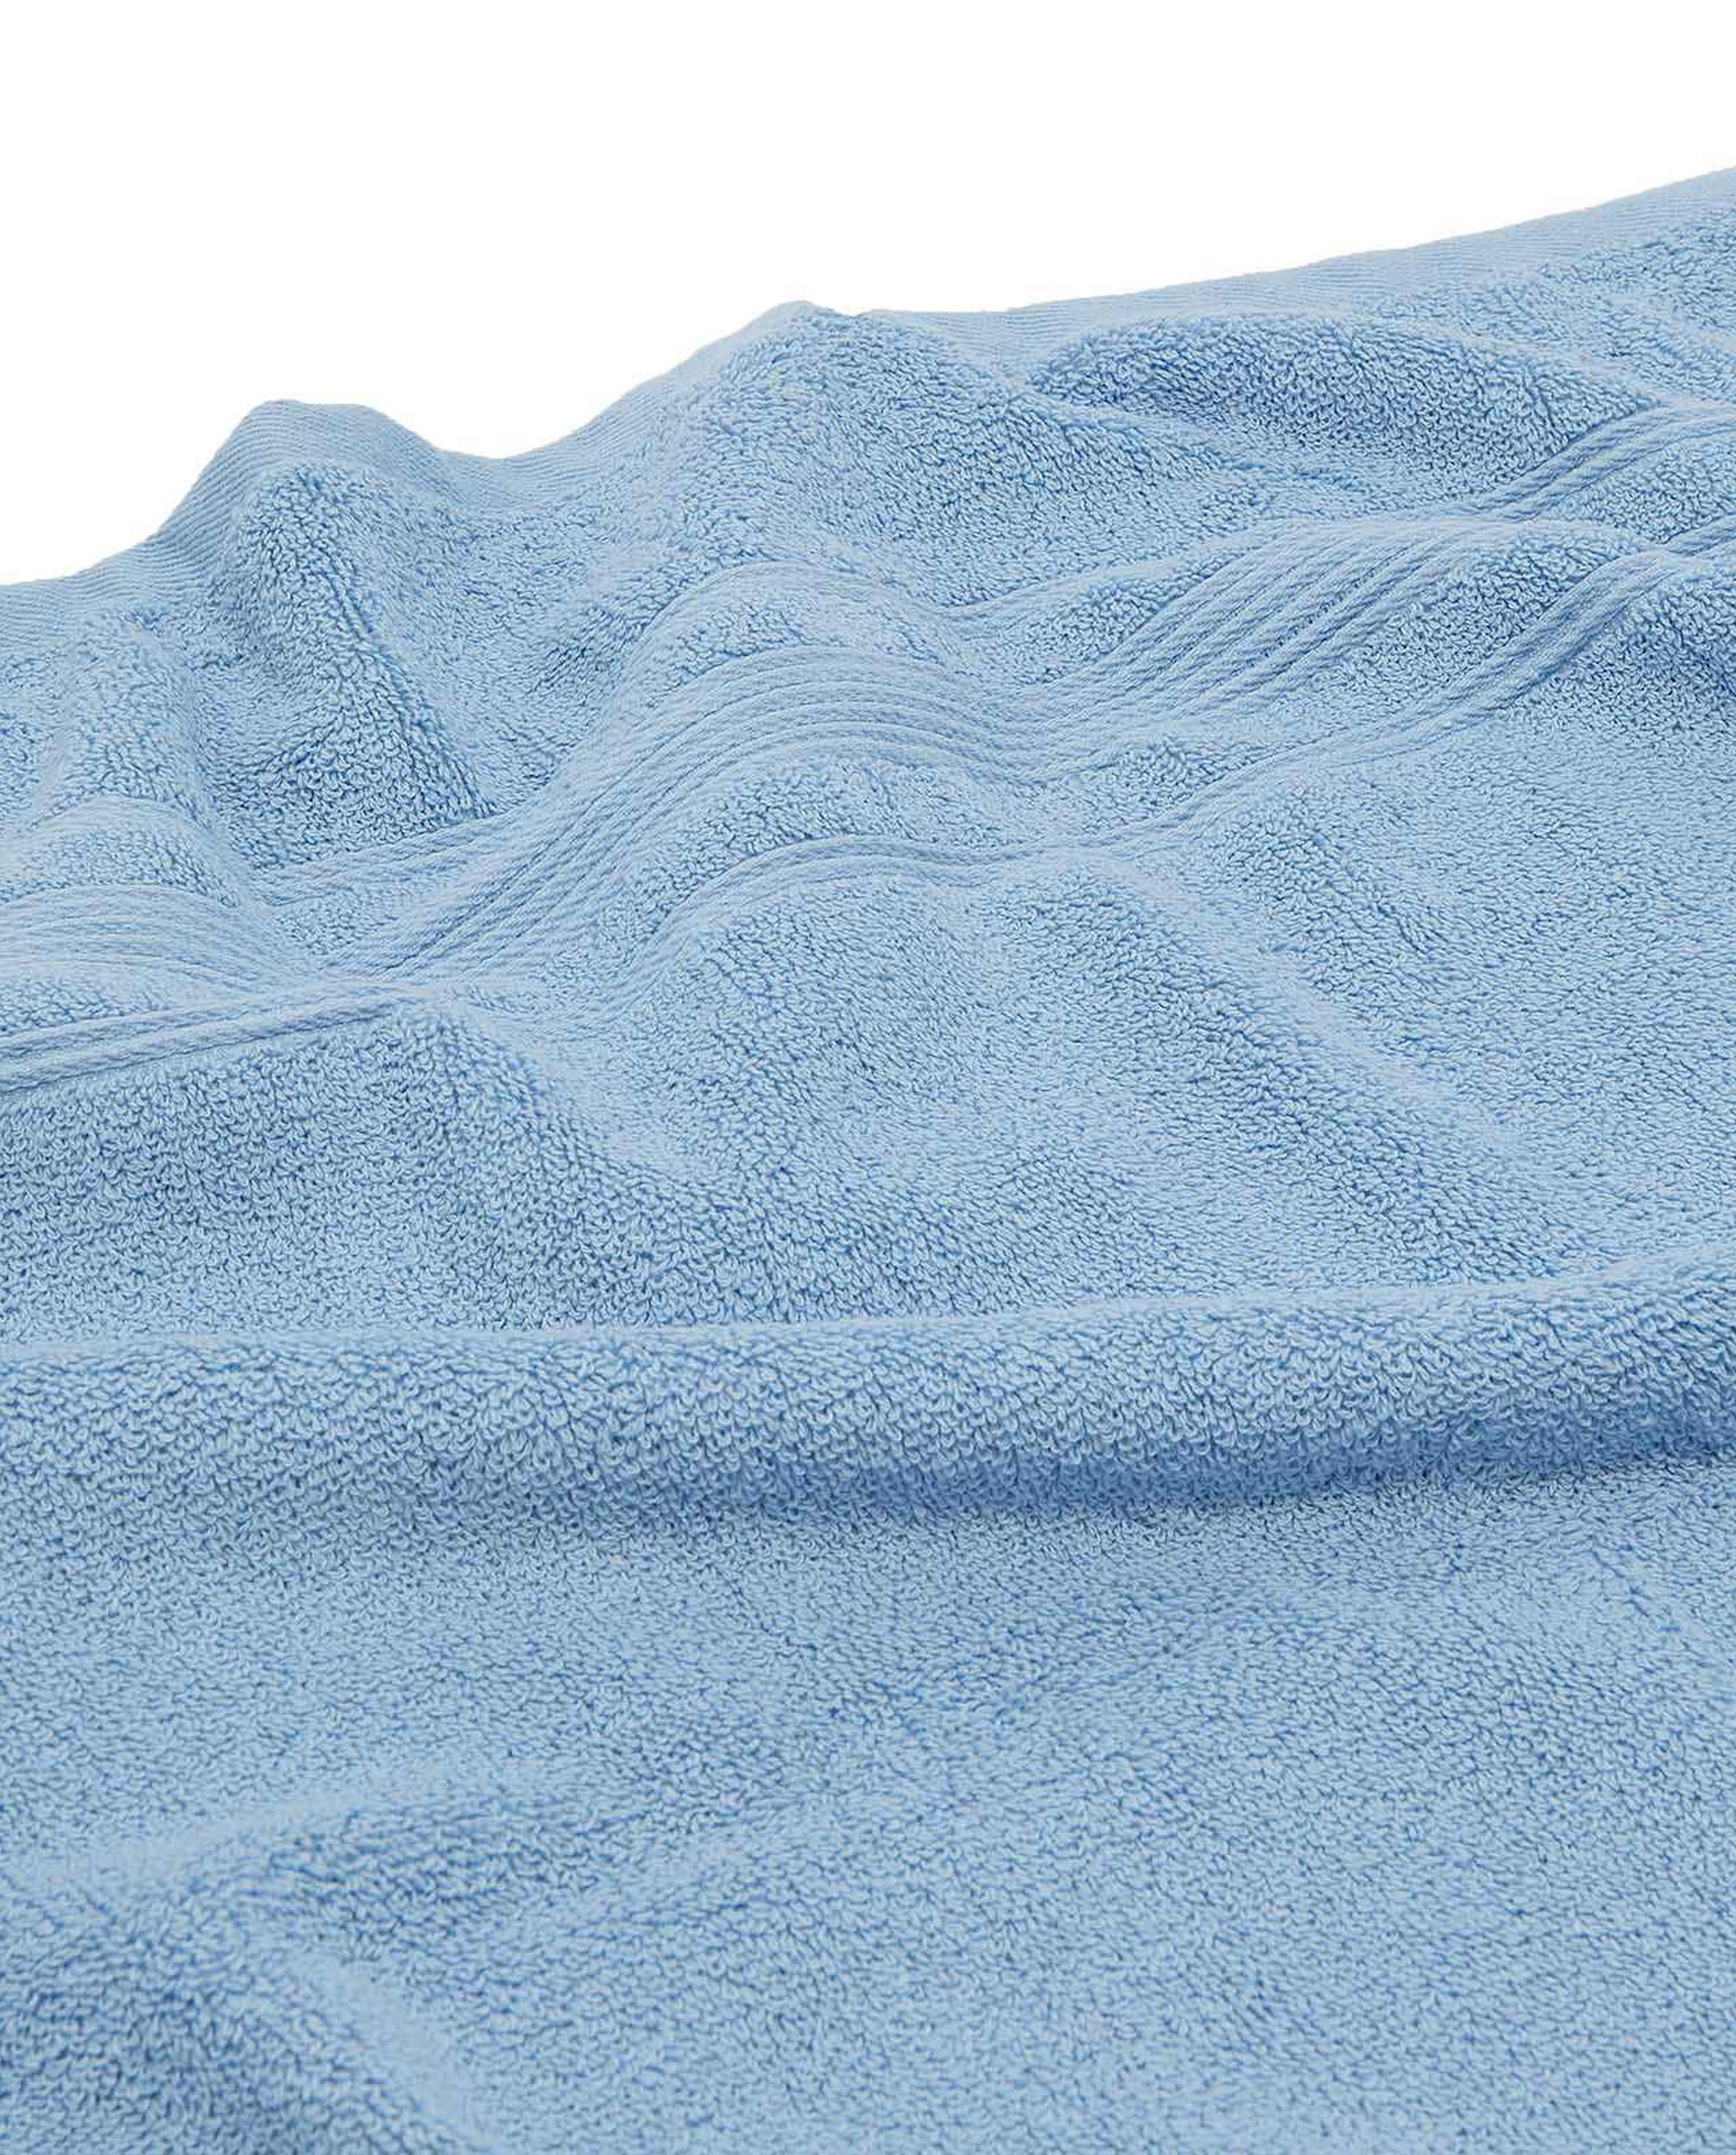 Textured Bath Towel